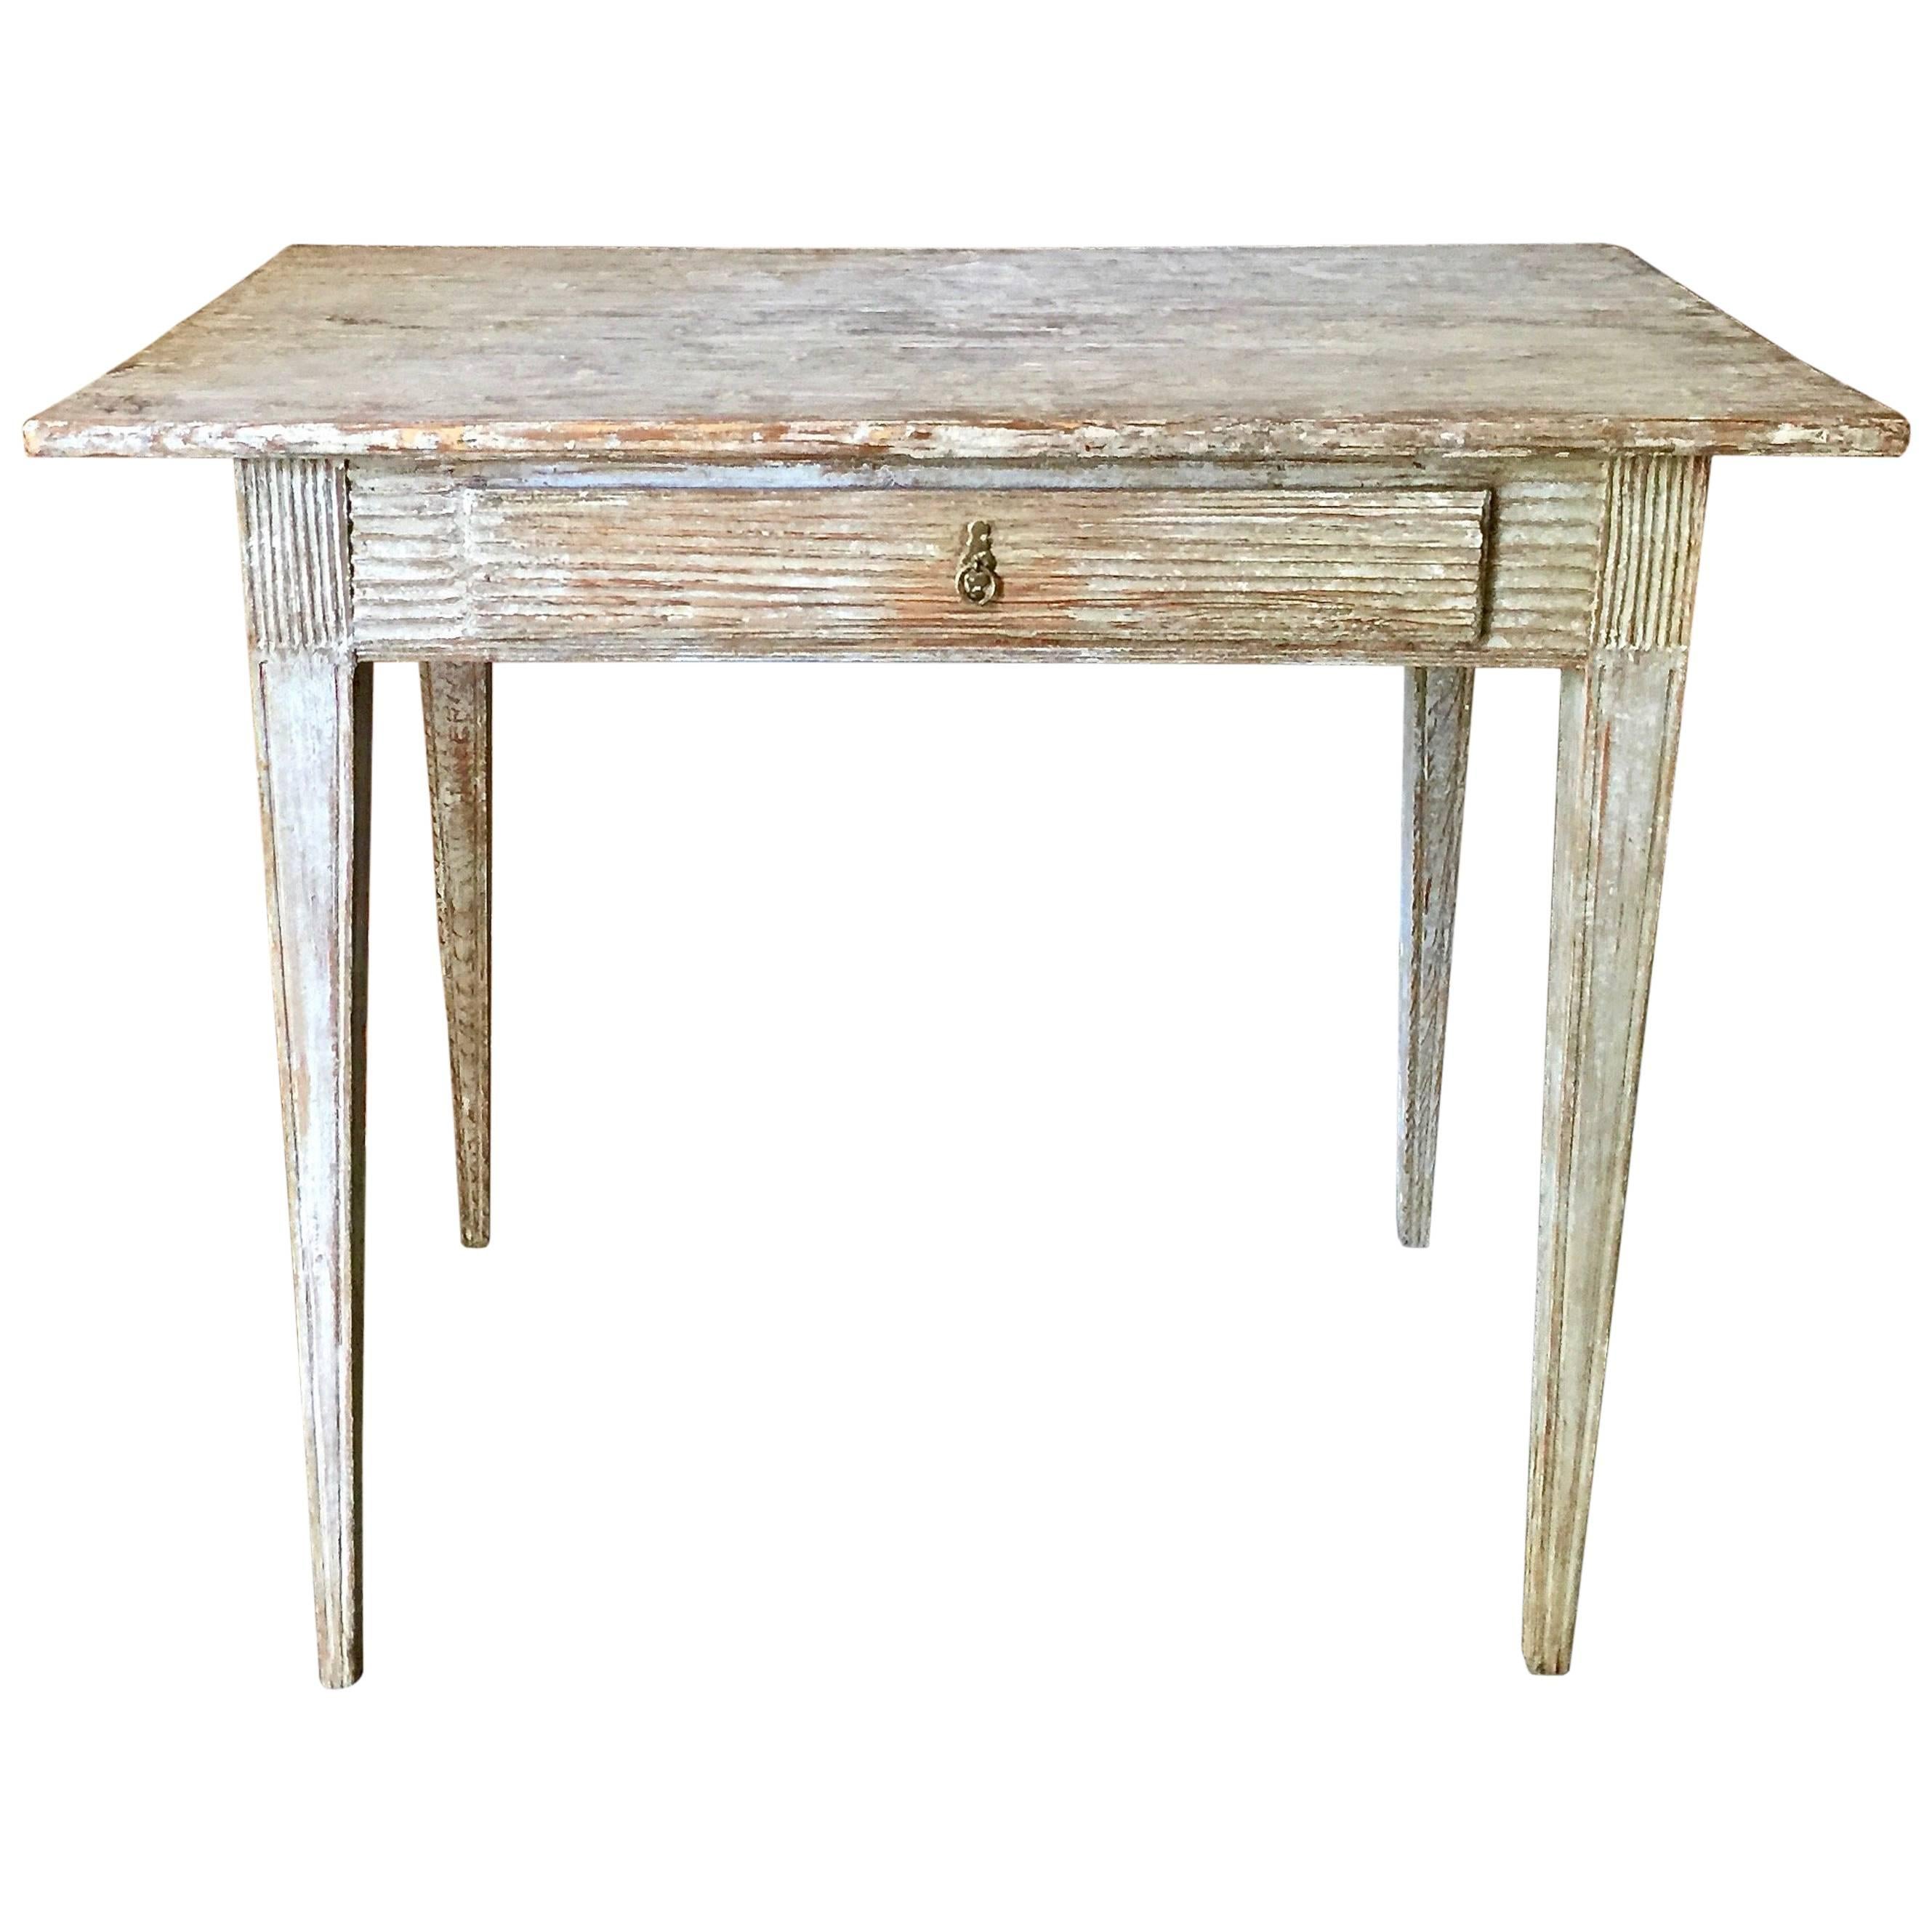 Period Swedish Gustavian Side Table